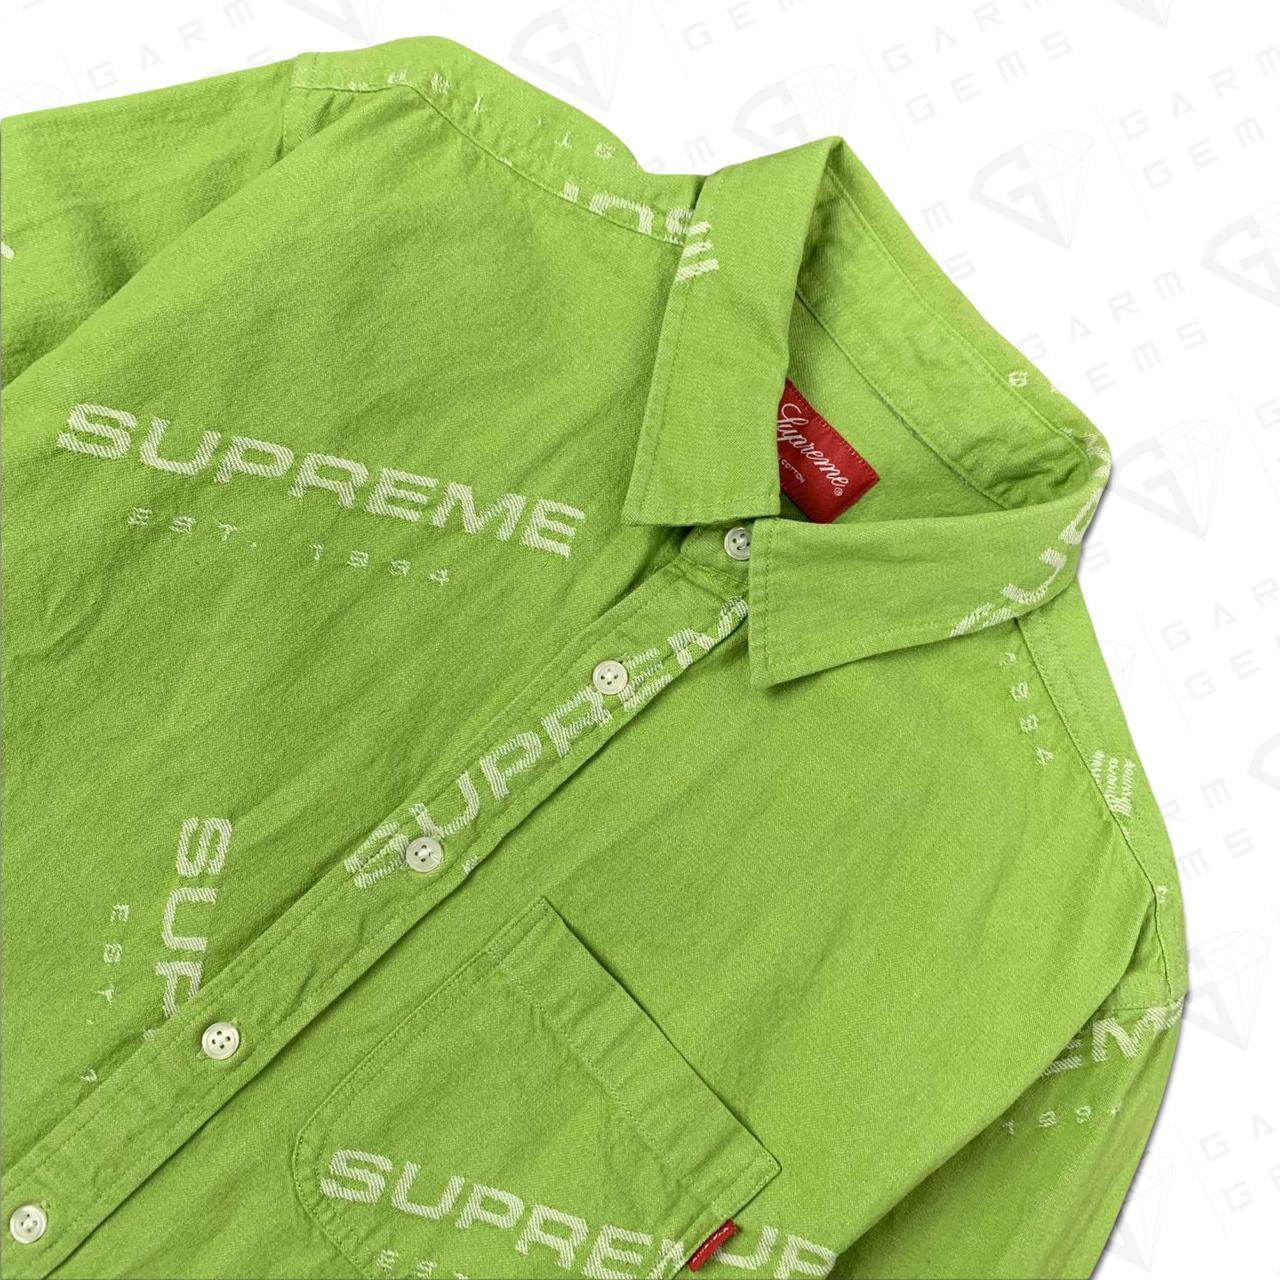 Supreme Men's Green and White Shirt | Depop